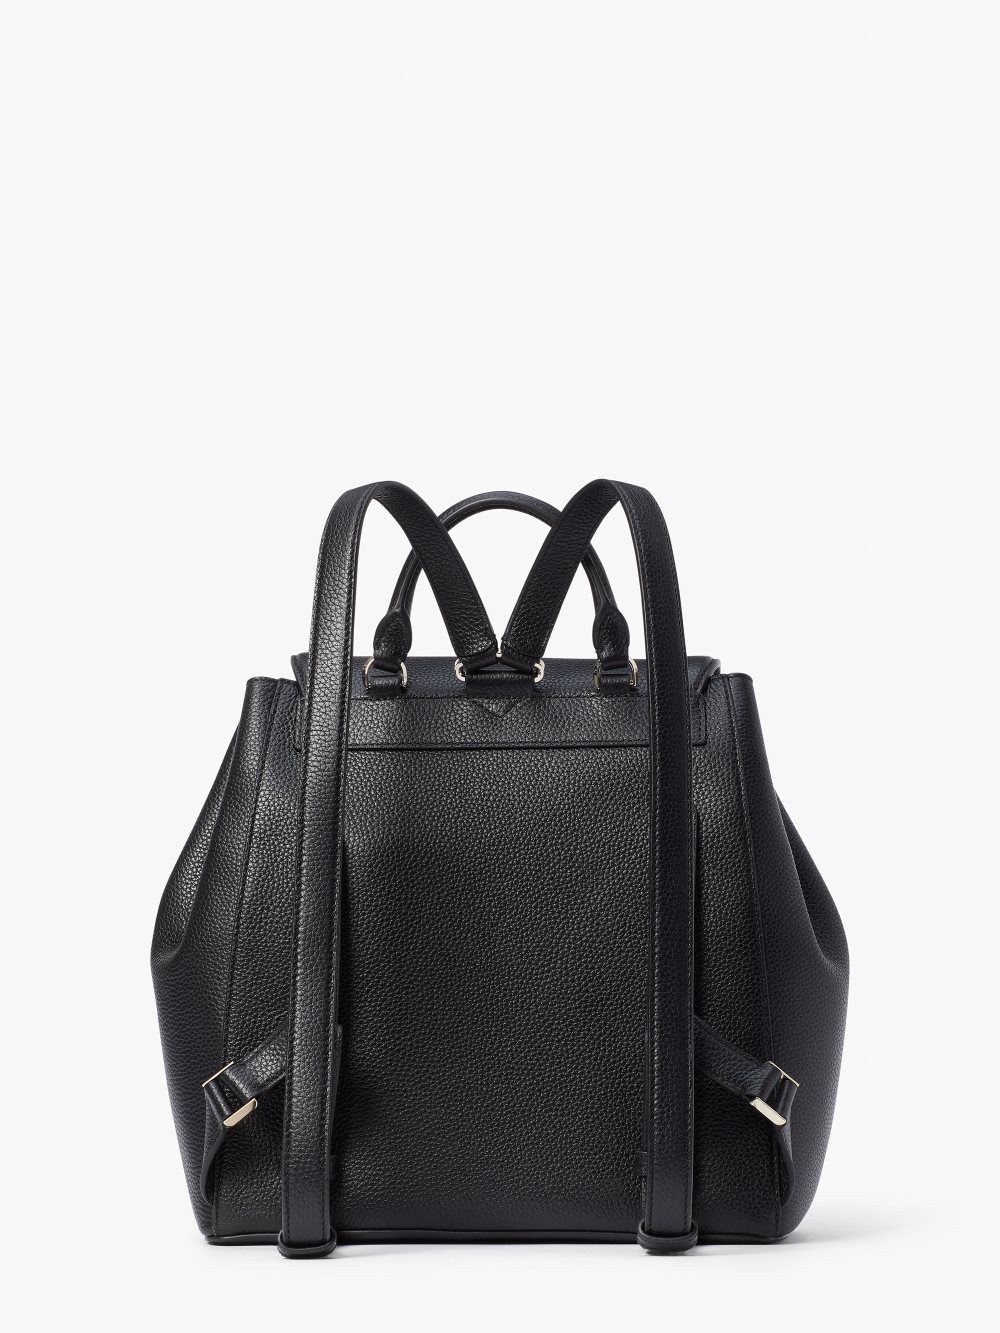 Women's black knott medium flap backpack | Kate Spade